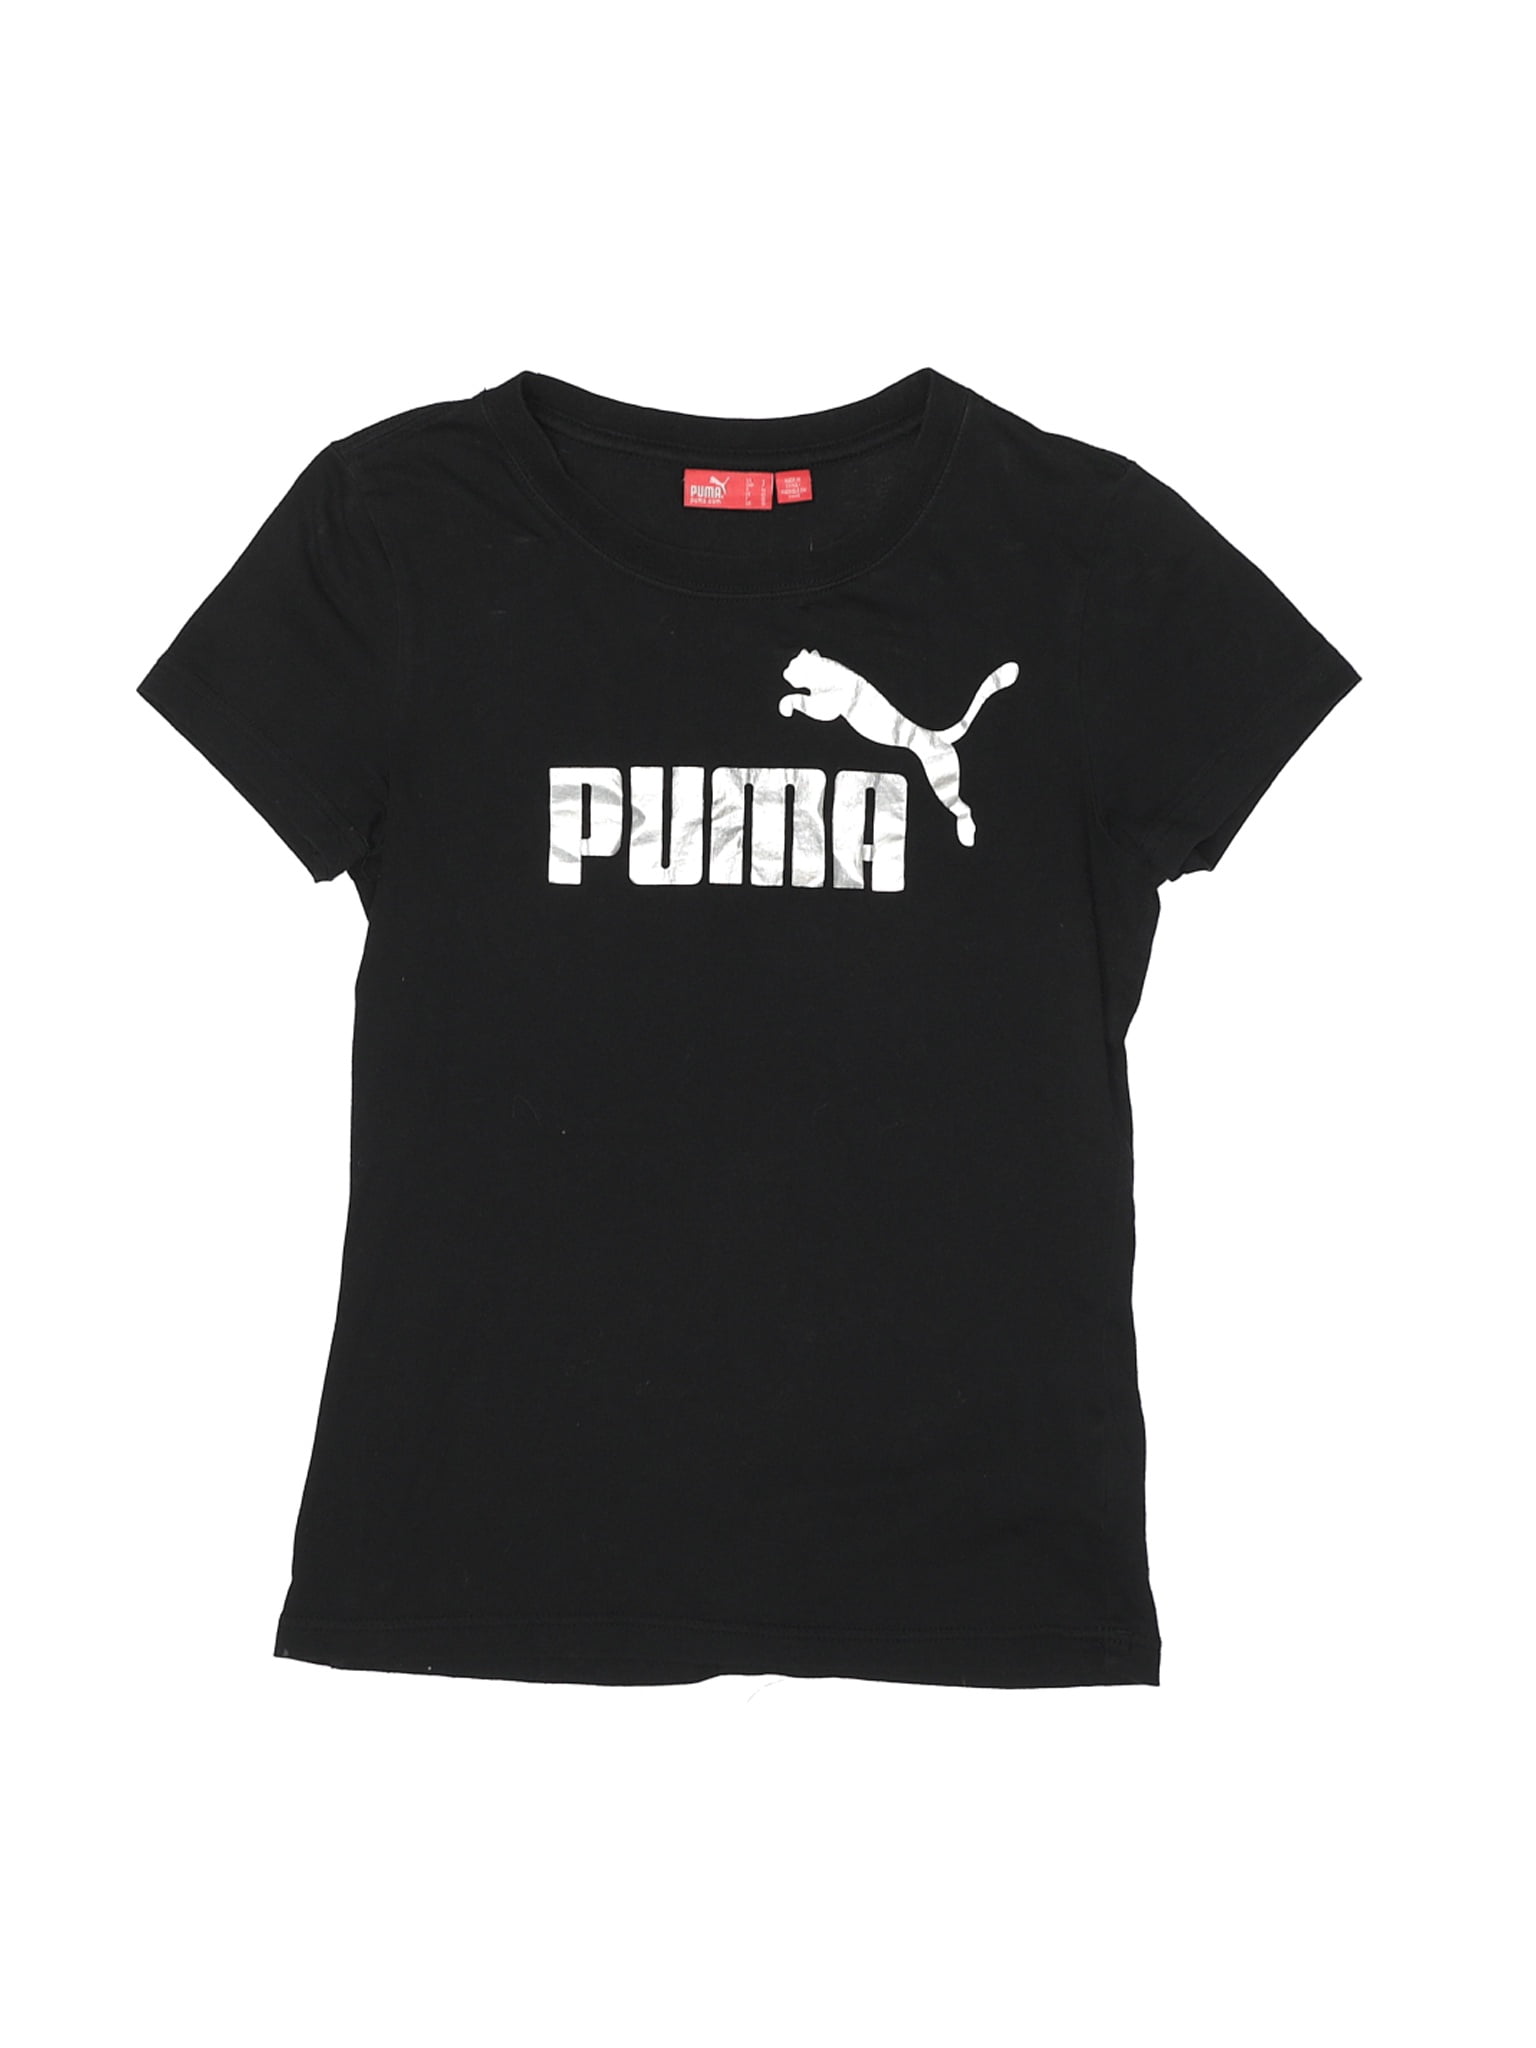 puma t shirts women's